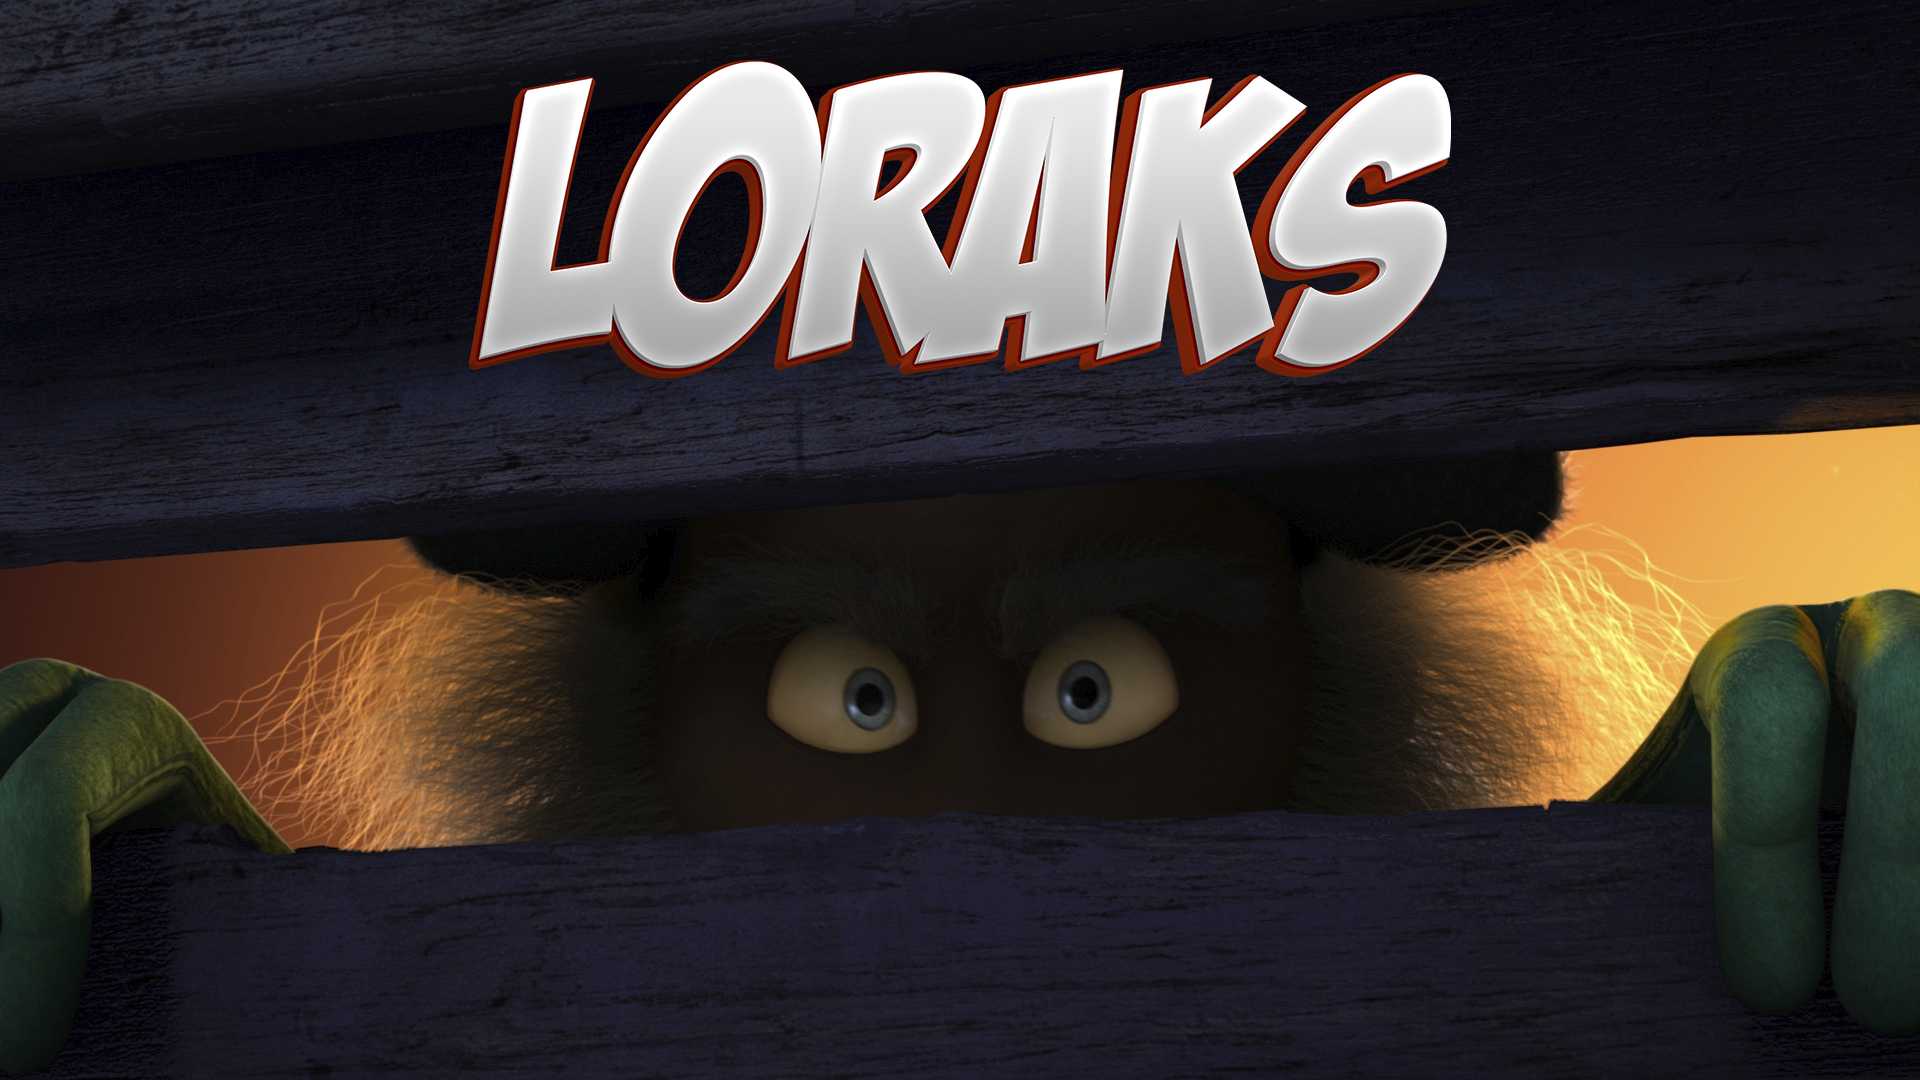 Loraks